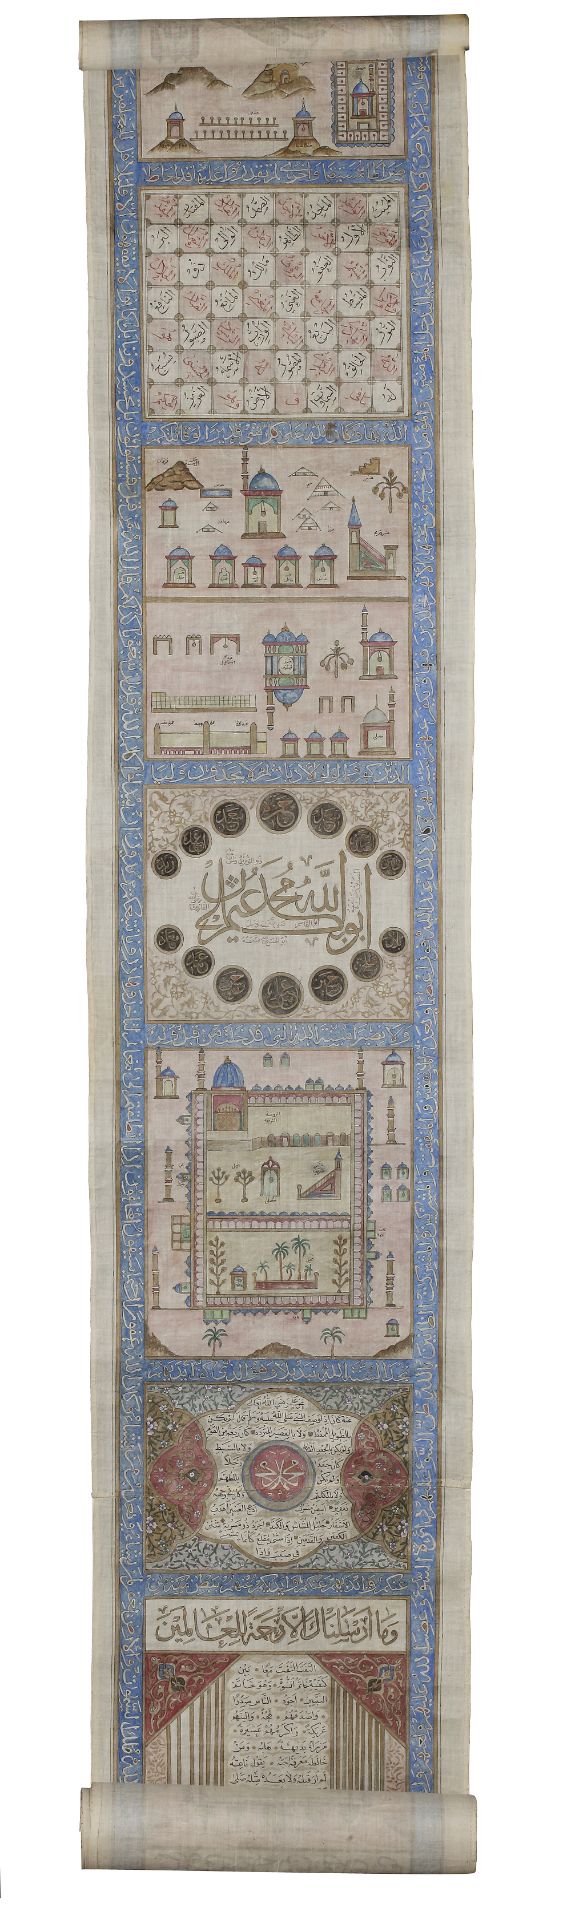 AN OTTOMAN ILLUMINATED HAJJ SCROLL, WRITTEN BY ABDUL-ALAH BIN HUSSAIN IN 1287 AH/1873 AD - Image 6 of 12